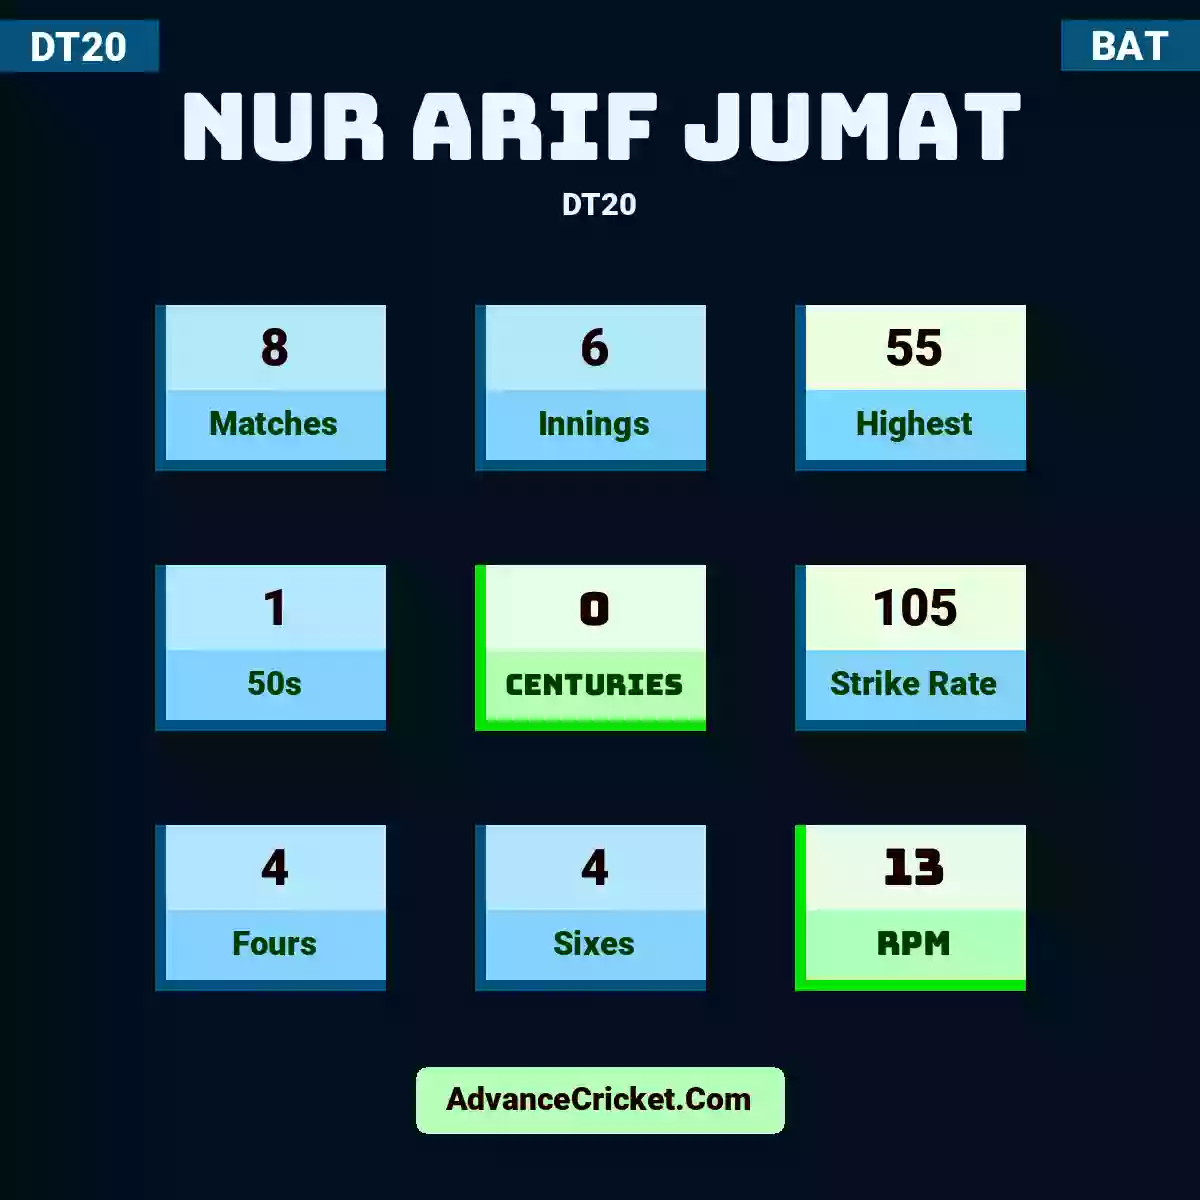 Nur Arif Jumat DT20 , Nur Arif Jumat played 8 matches, scored 55 runs as highest, 1 half-centuries, and 0 centuries, with a strike rate of 105. N.Arif.Jumat hit 4 fours and 4 sixes, with an RPM of 13.